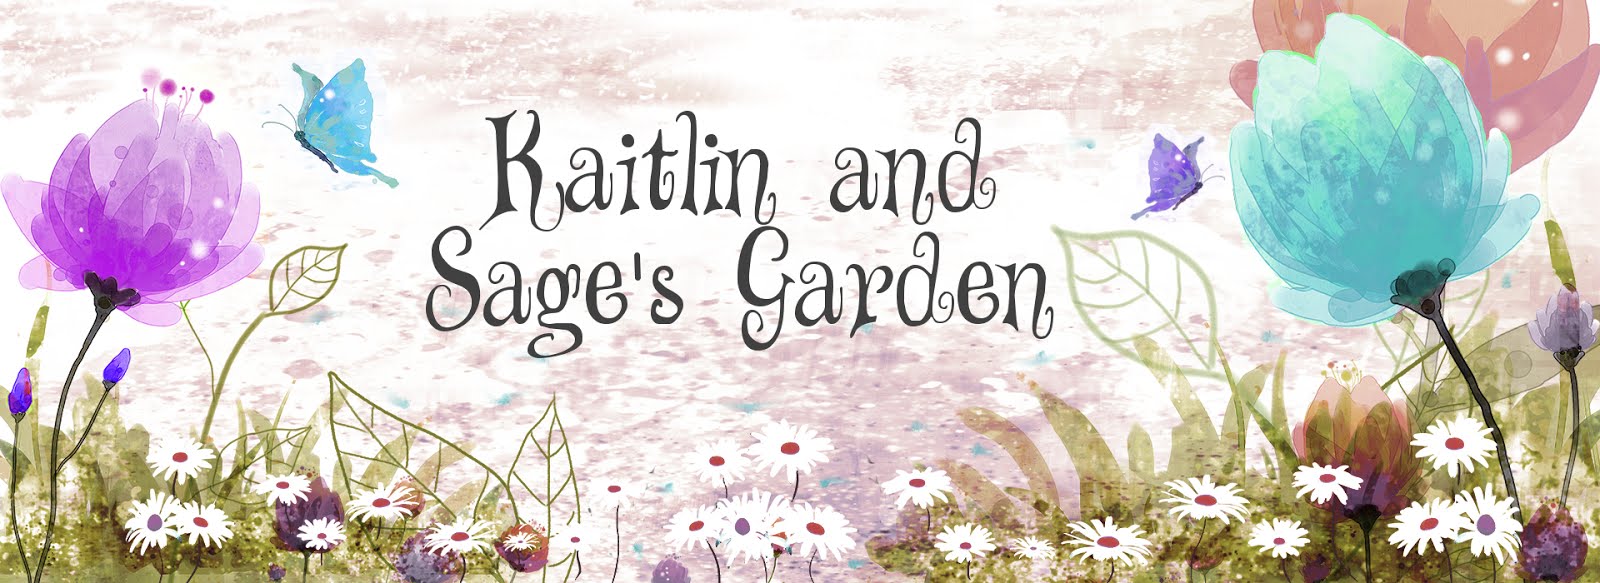 Kaitlin and Sage's Garden